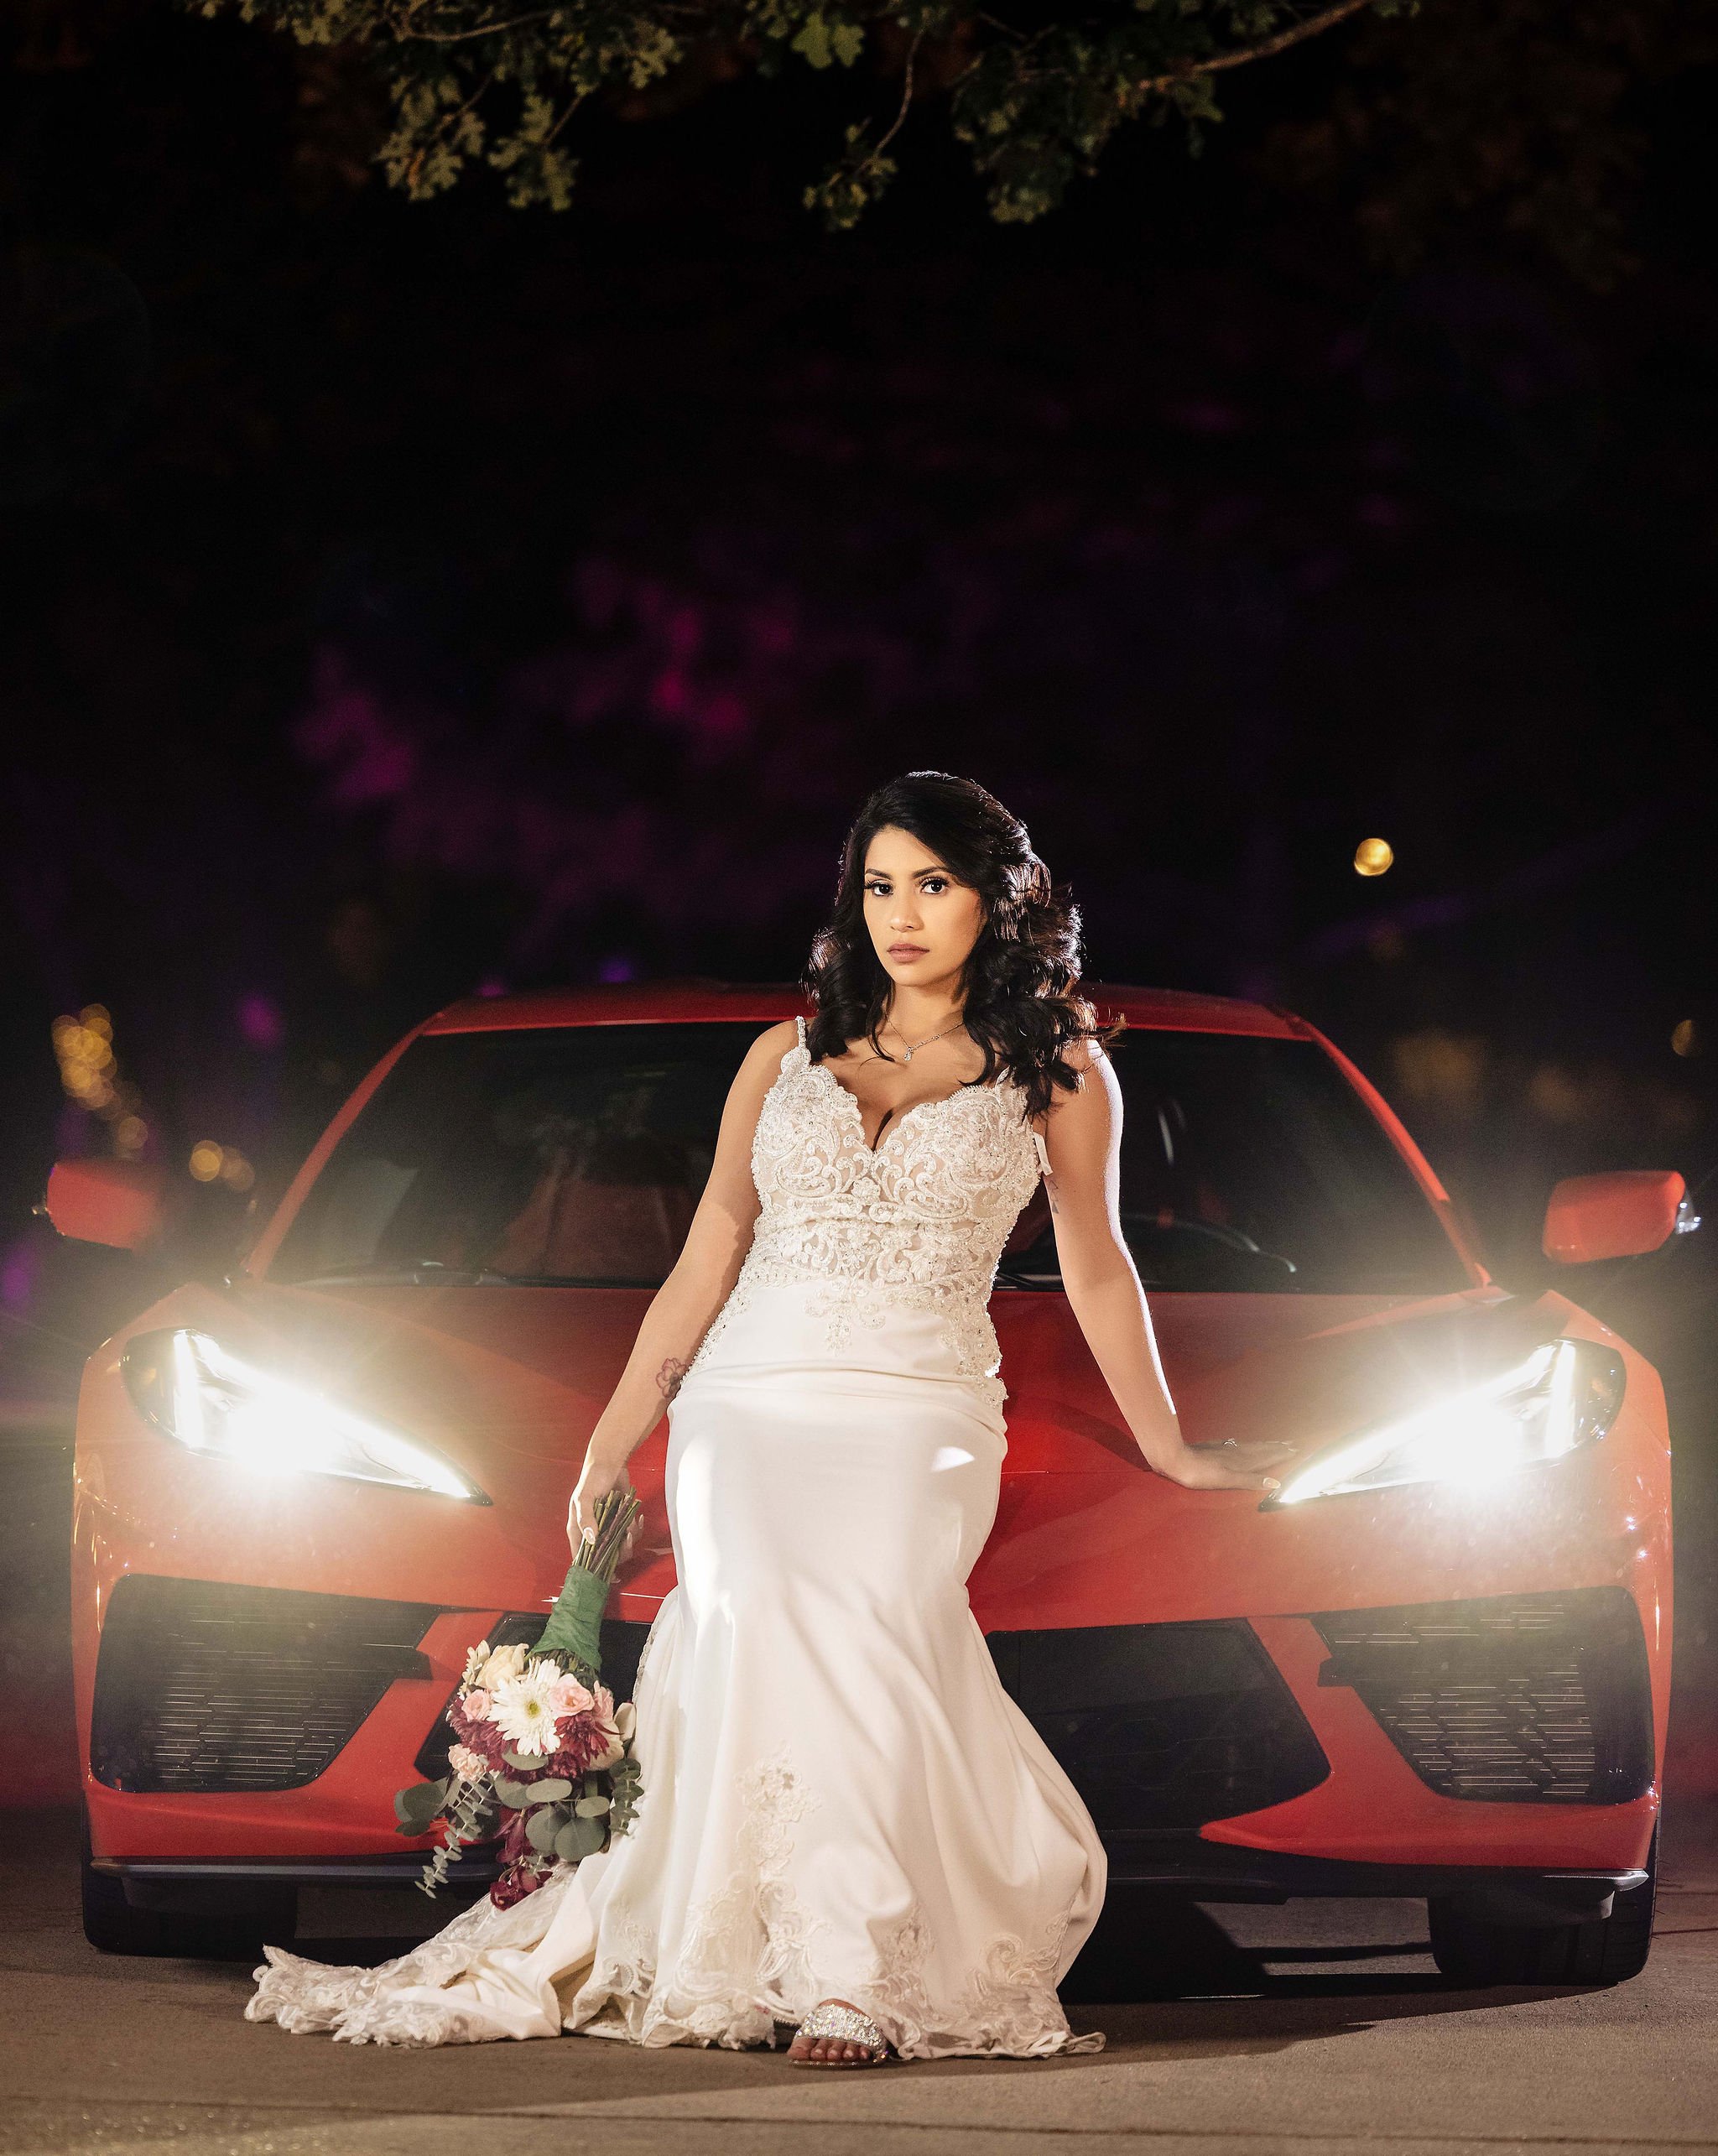 Fort Worth Bride - Fort Worth Wedding photographer - corvette.jpg